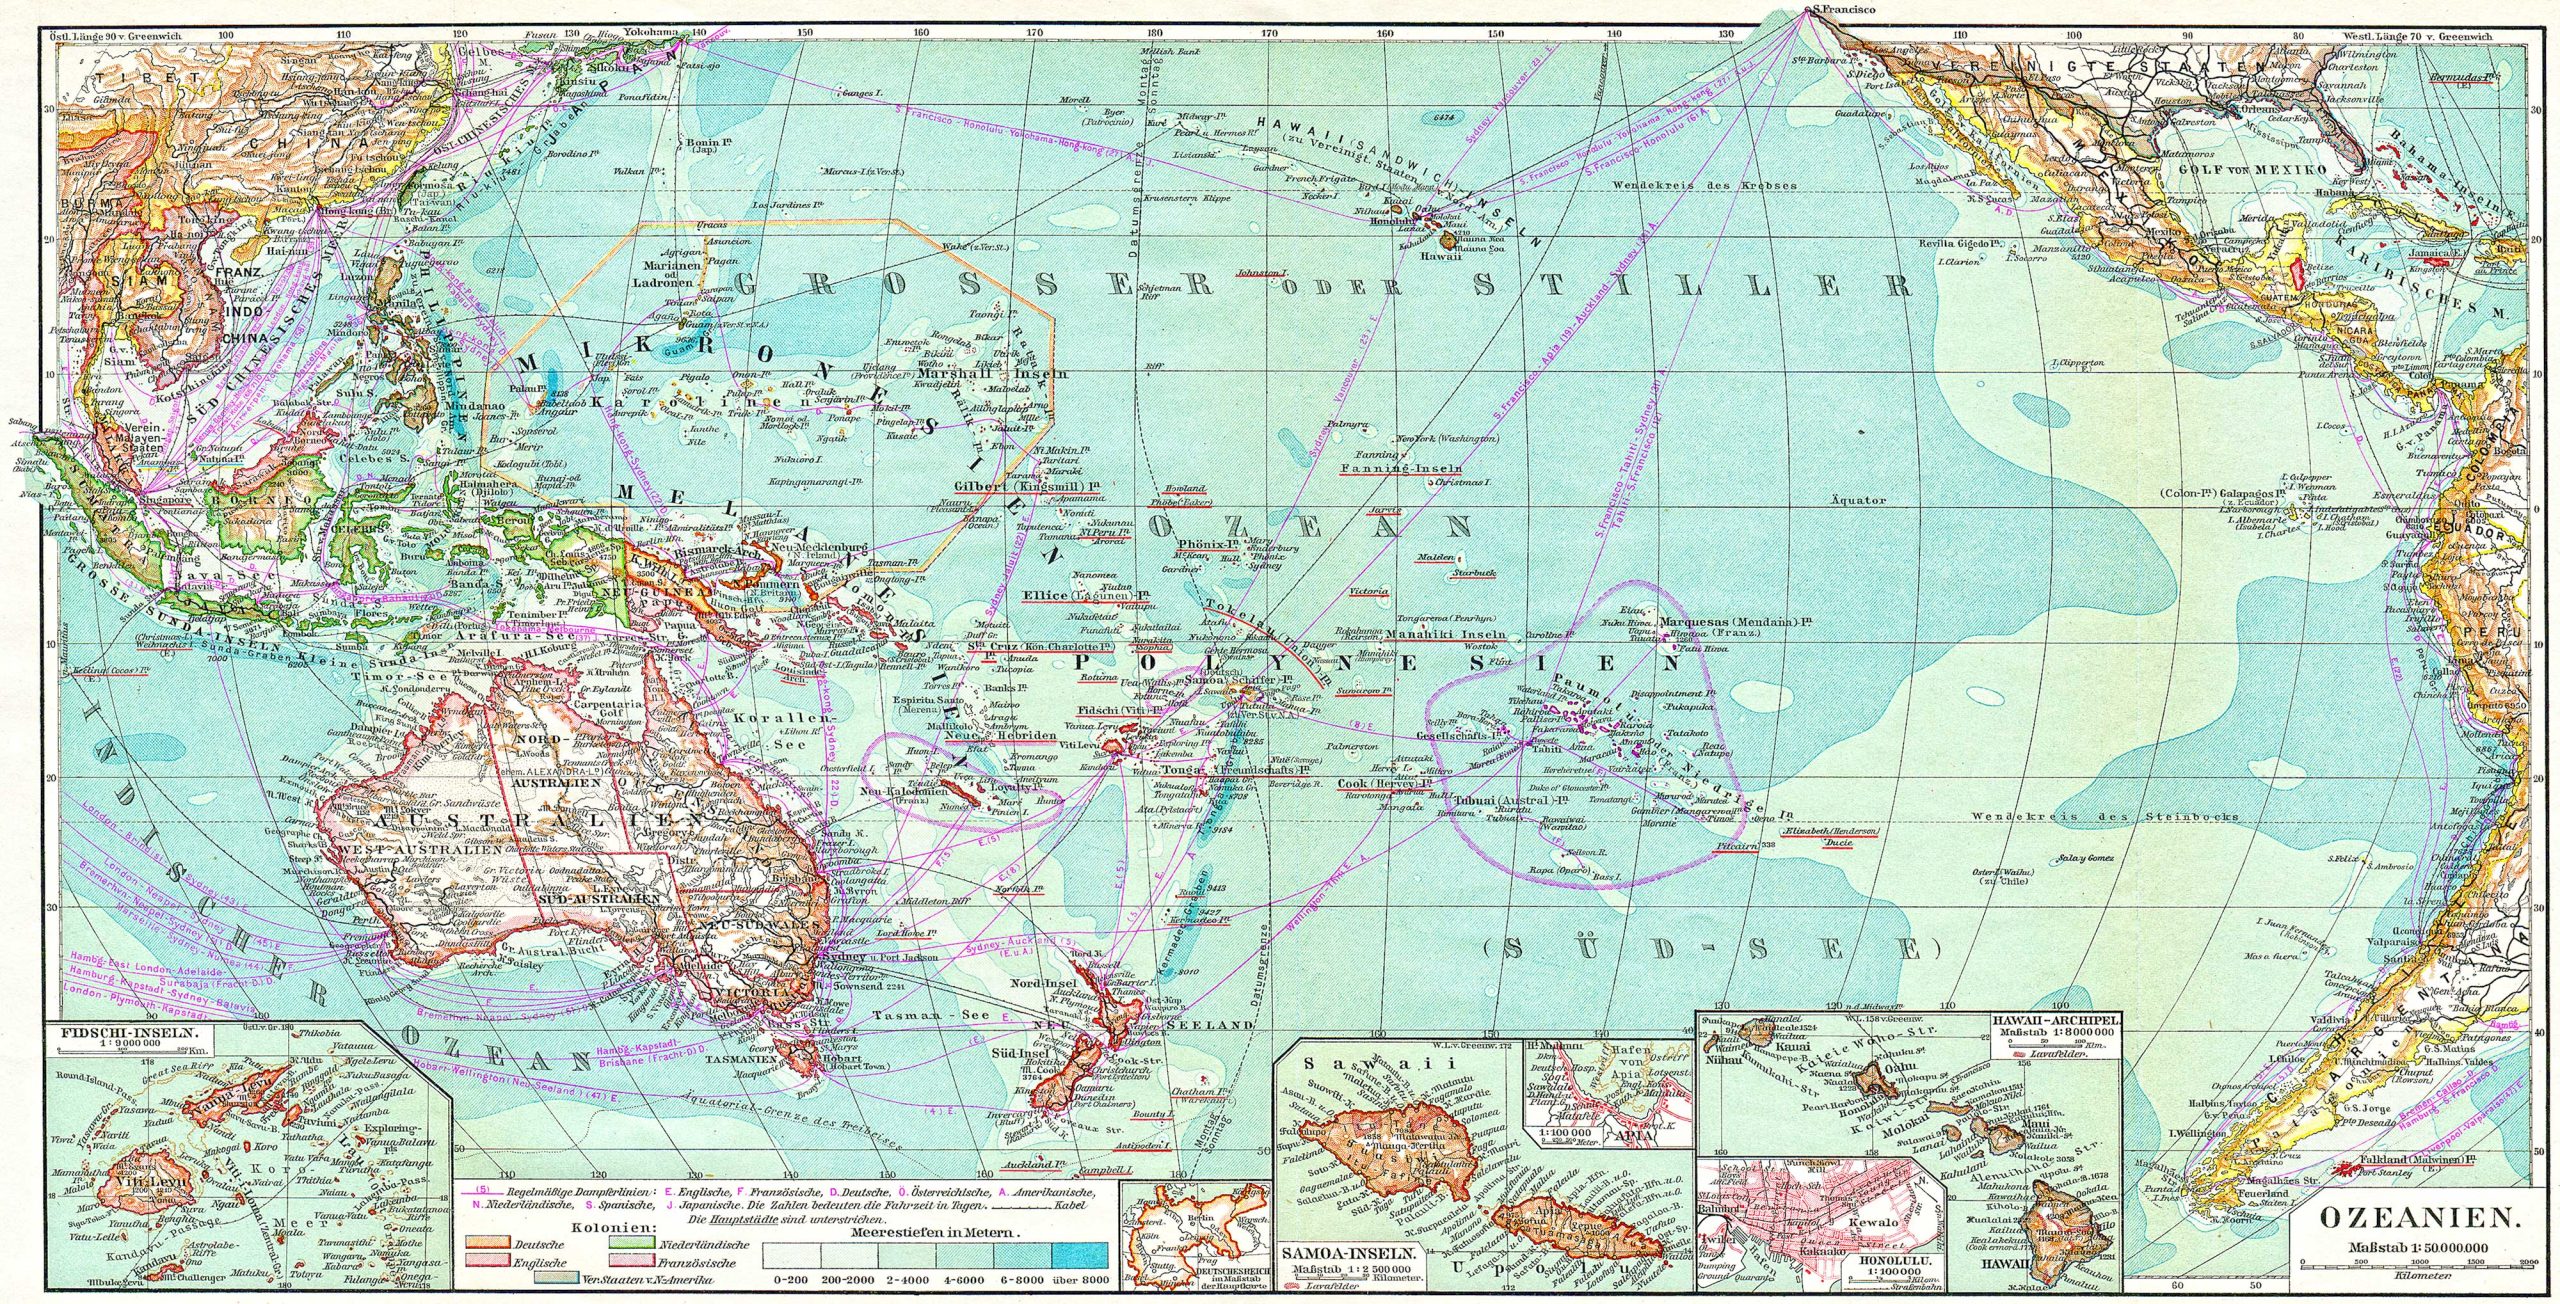 Oceania Atlas Map